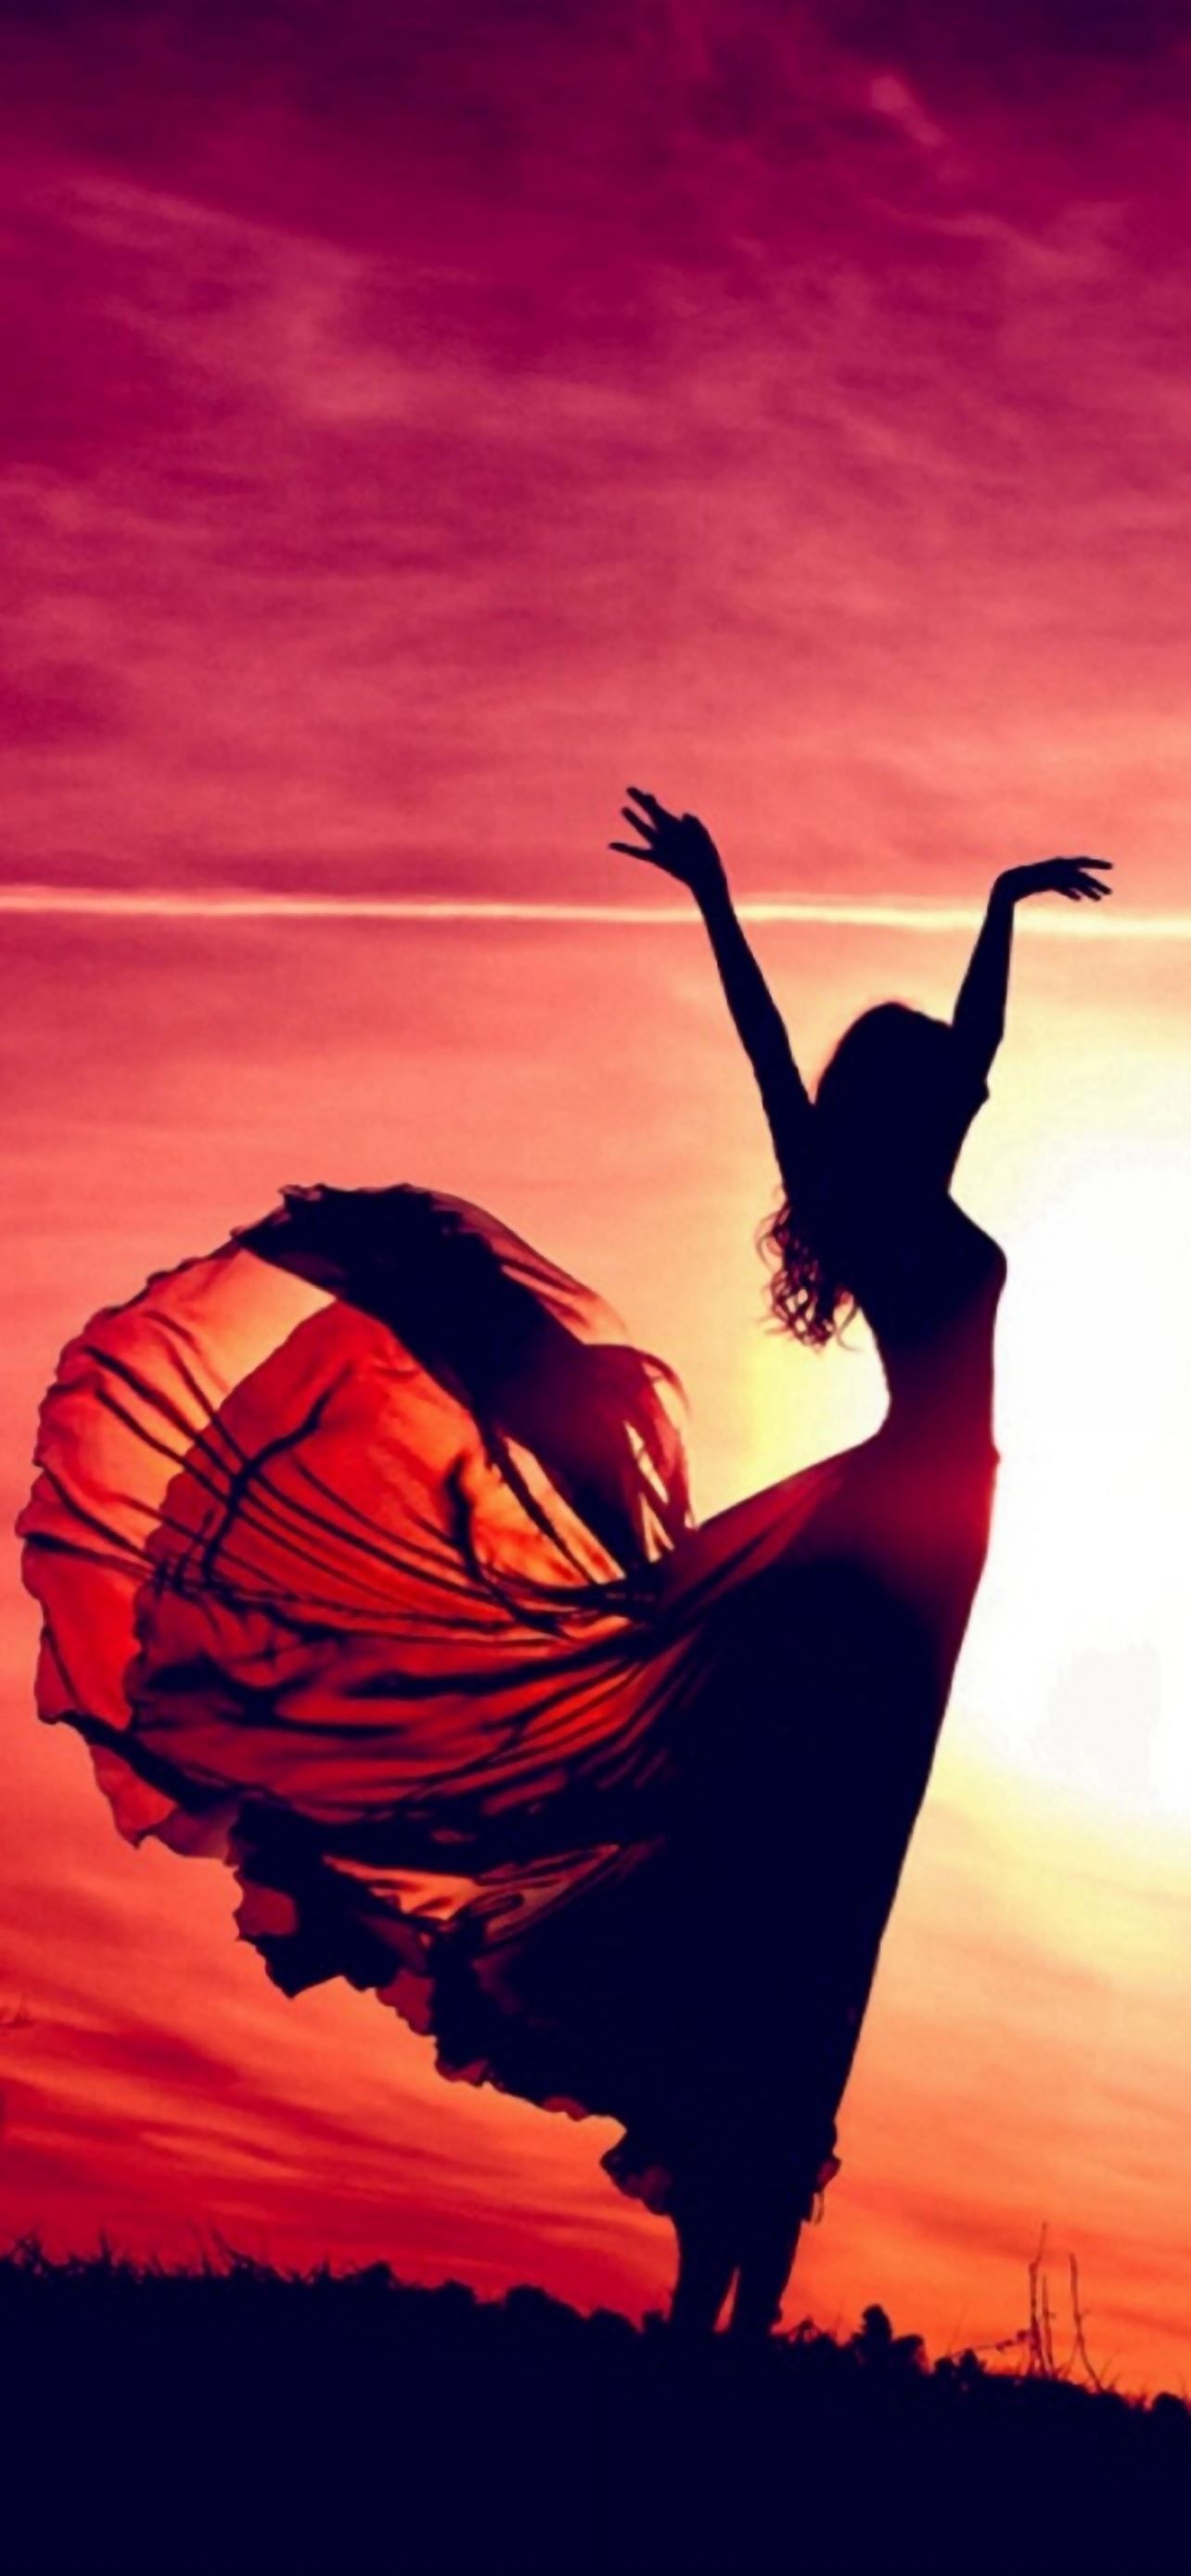 Aesthetic Dancing Sunshine Beauty Girl iPhone Wallpaper Free Download